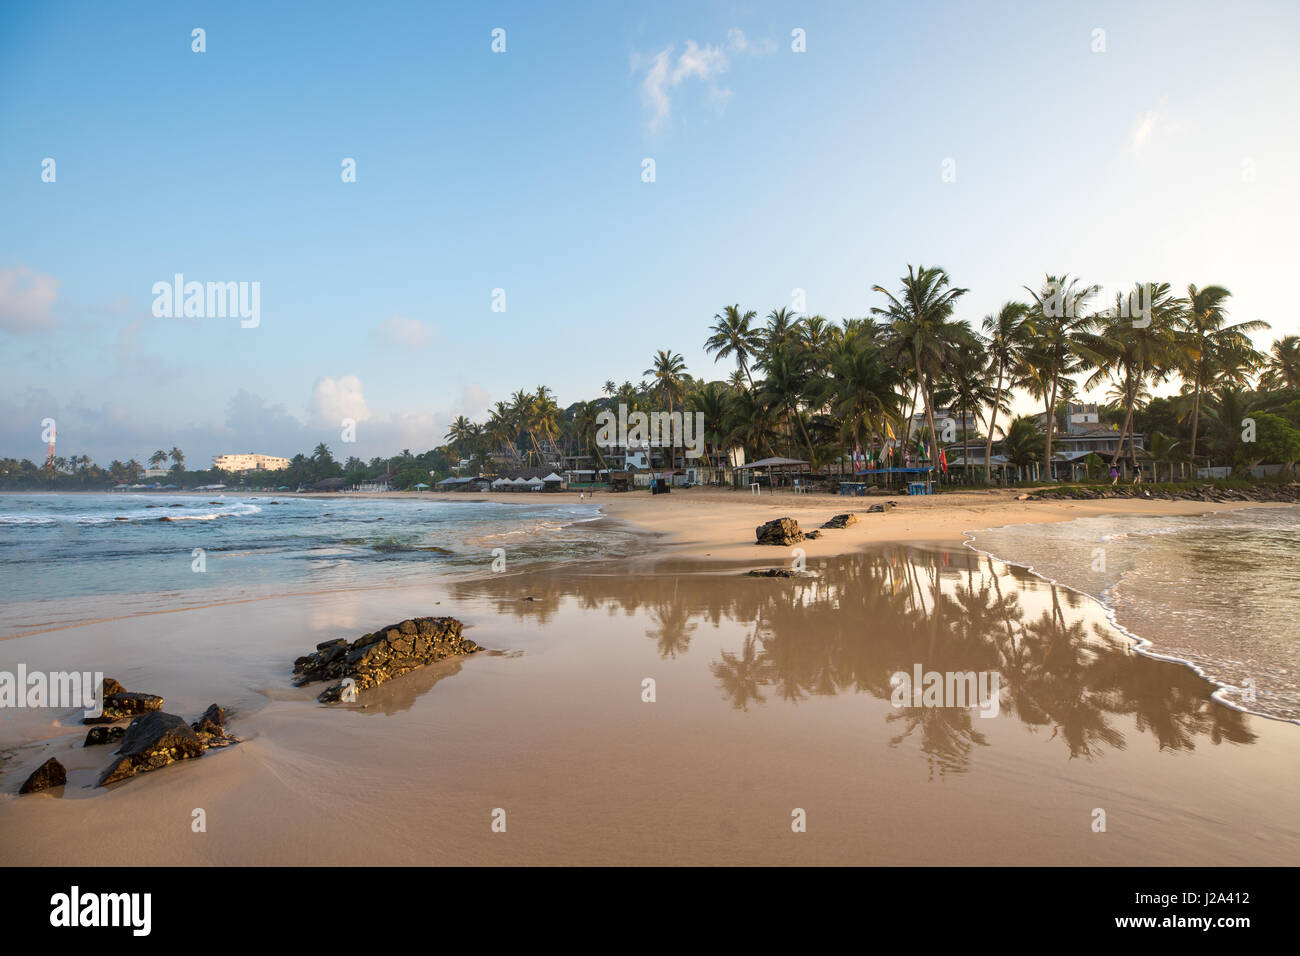 Tropical paradise beach with ocean and palm trees in Mirissa, Sri Lanka. Stock Photo